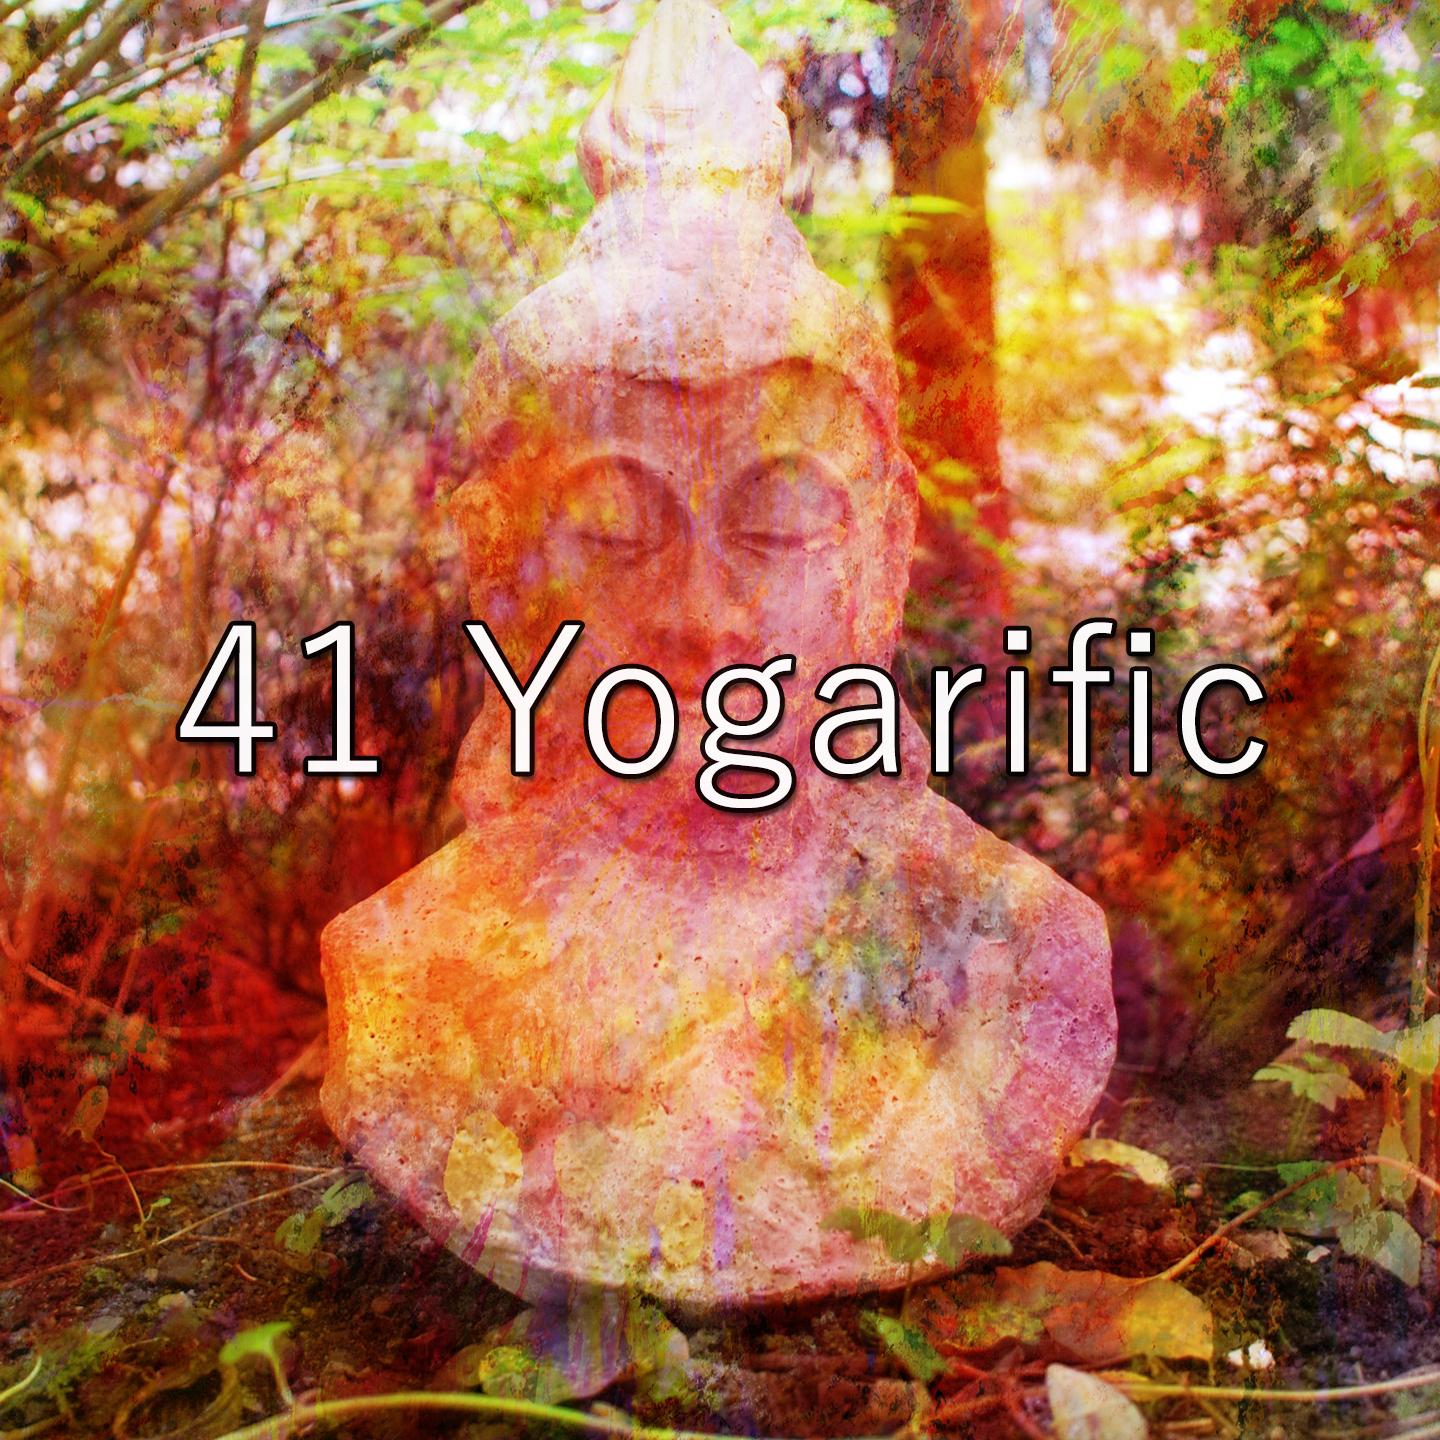 41 Yogarific